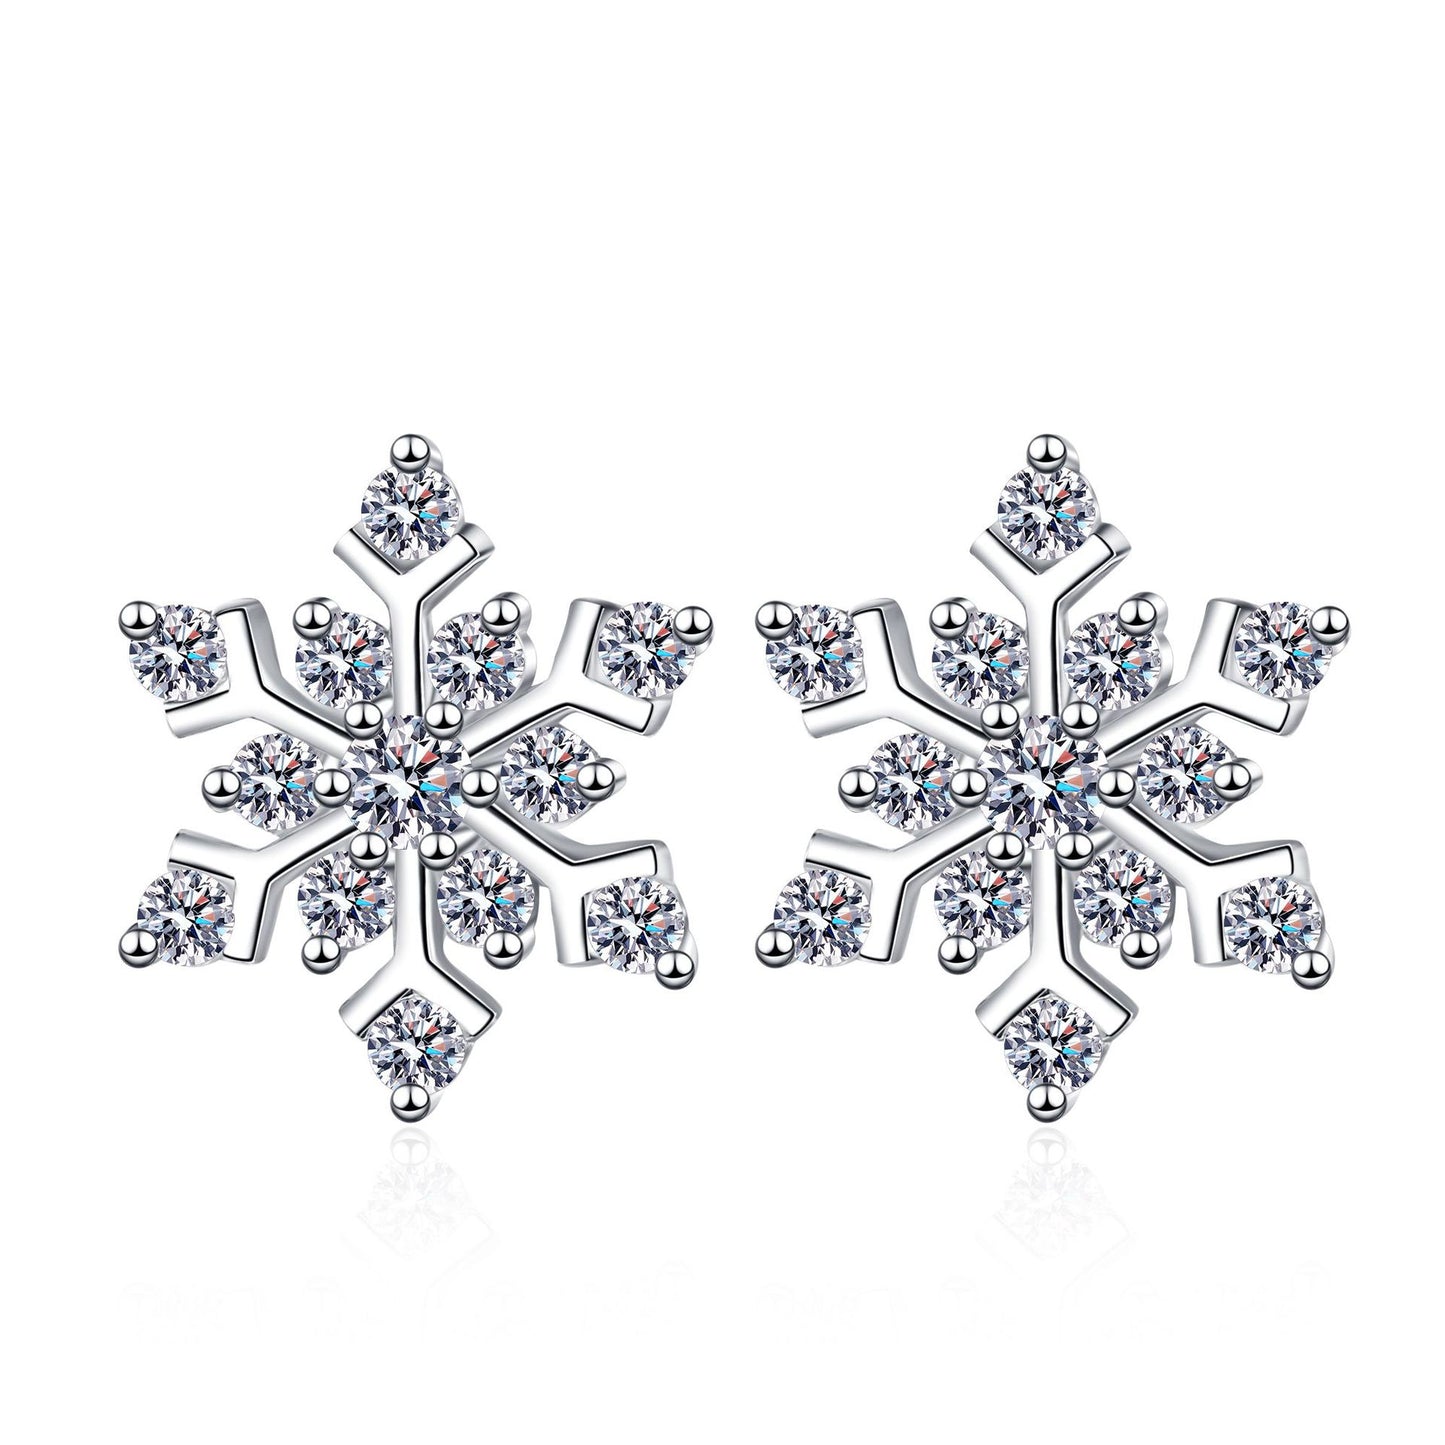 Snowflake Moissanite Earrings in Platinum-Plated 925 Sterling Silver